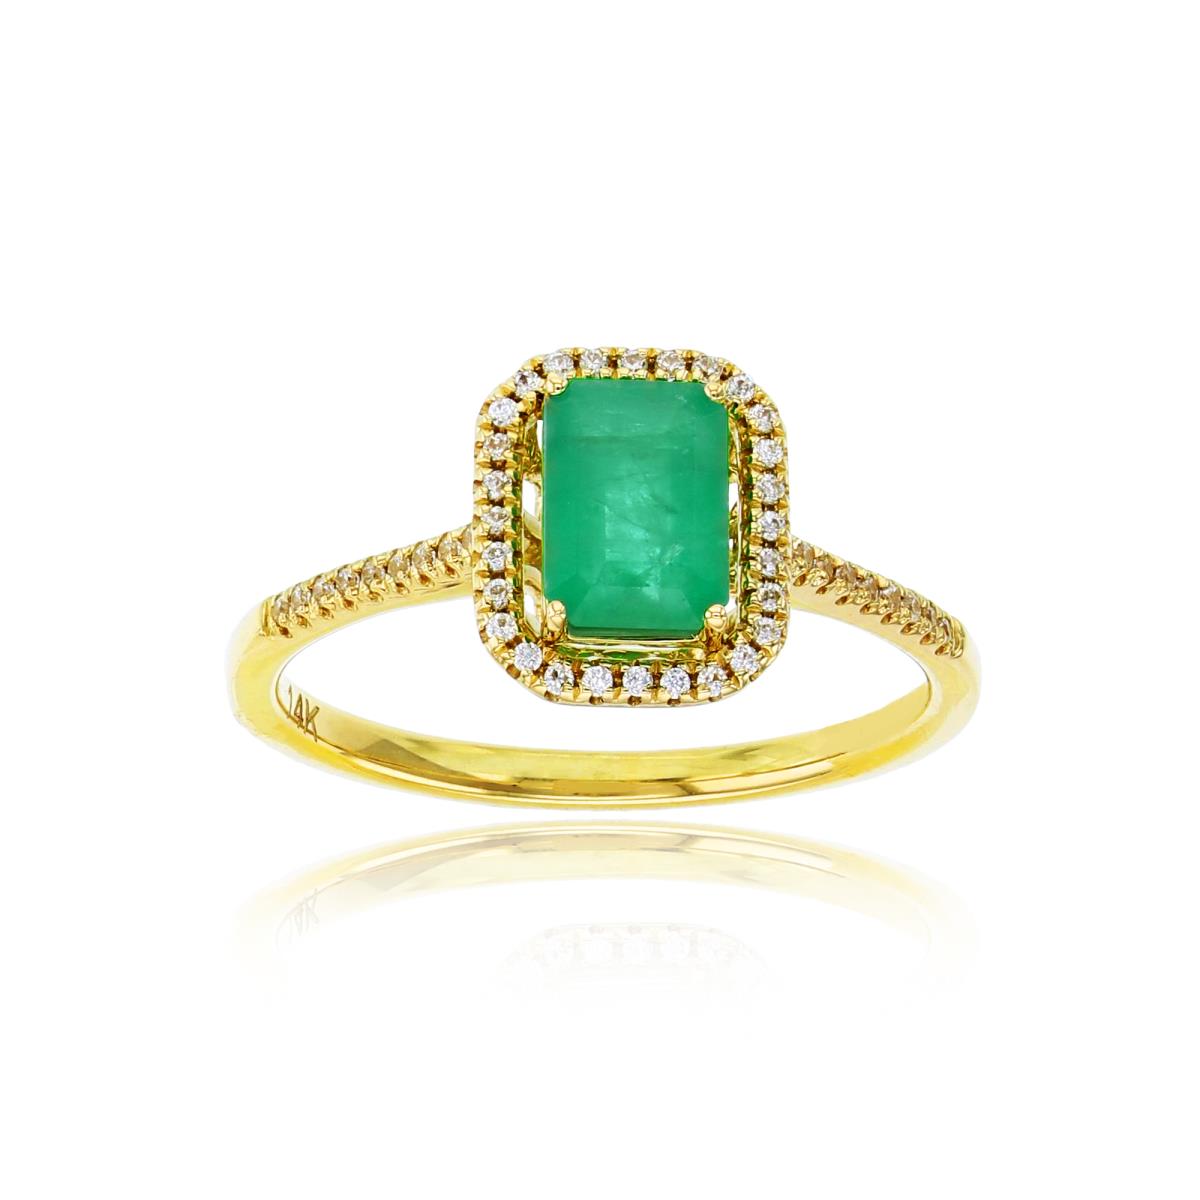 14K Yellow Gold 0.14 CTTW Rnd Diam & 7x5mm Oct Emerald Halo Ring